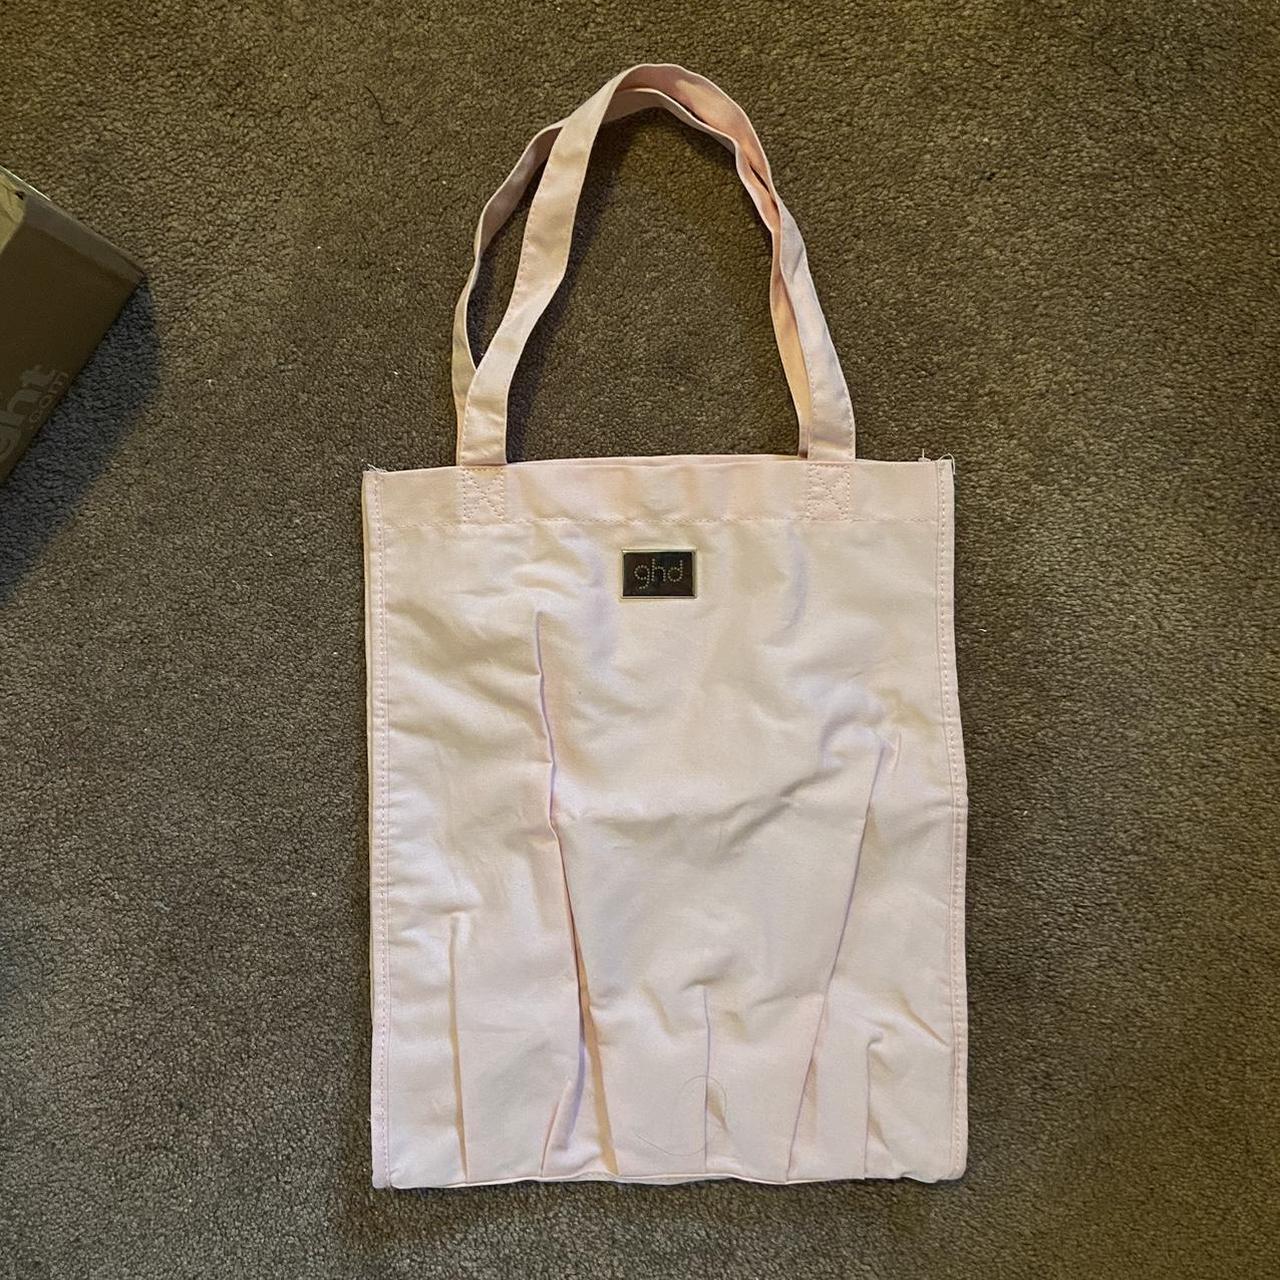 ghd Women's Pink Bag